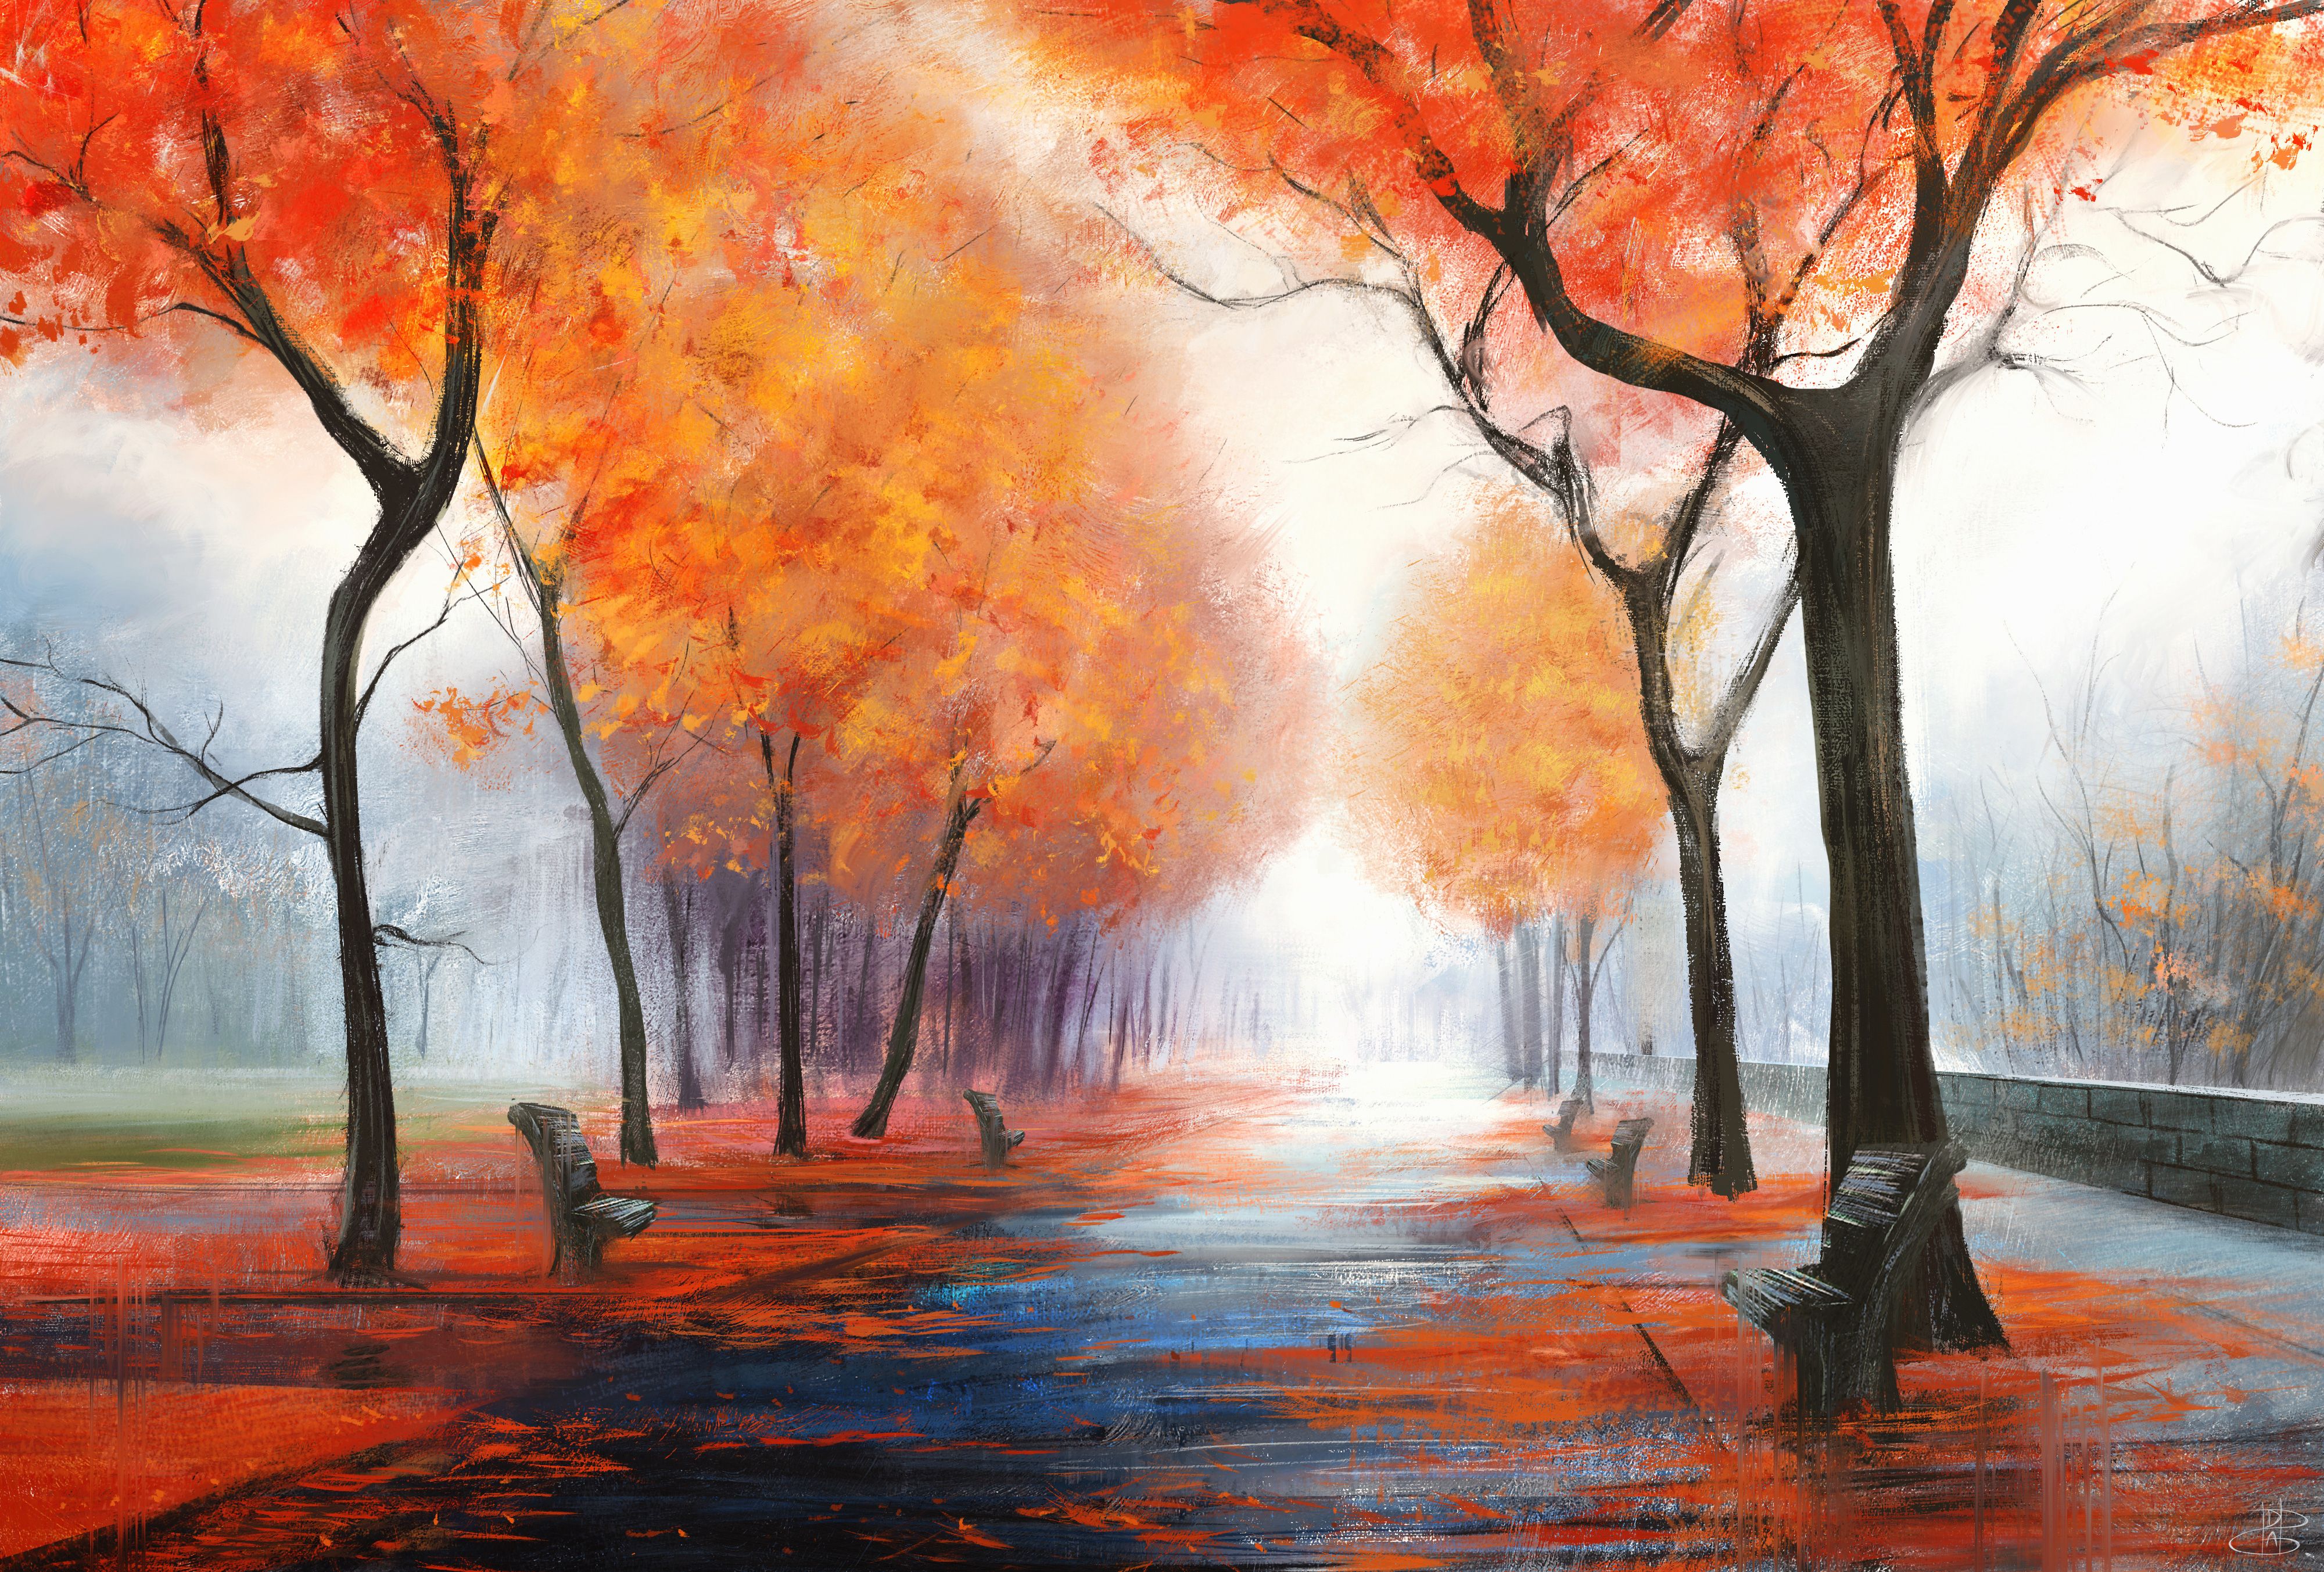 Autumn Park Digital Art 4k, HD Artist, 4k Wallpaper, Image, Background, Photo and Picture